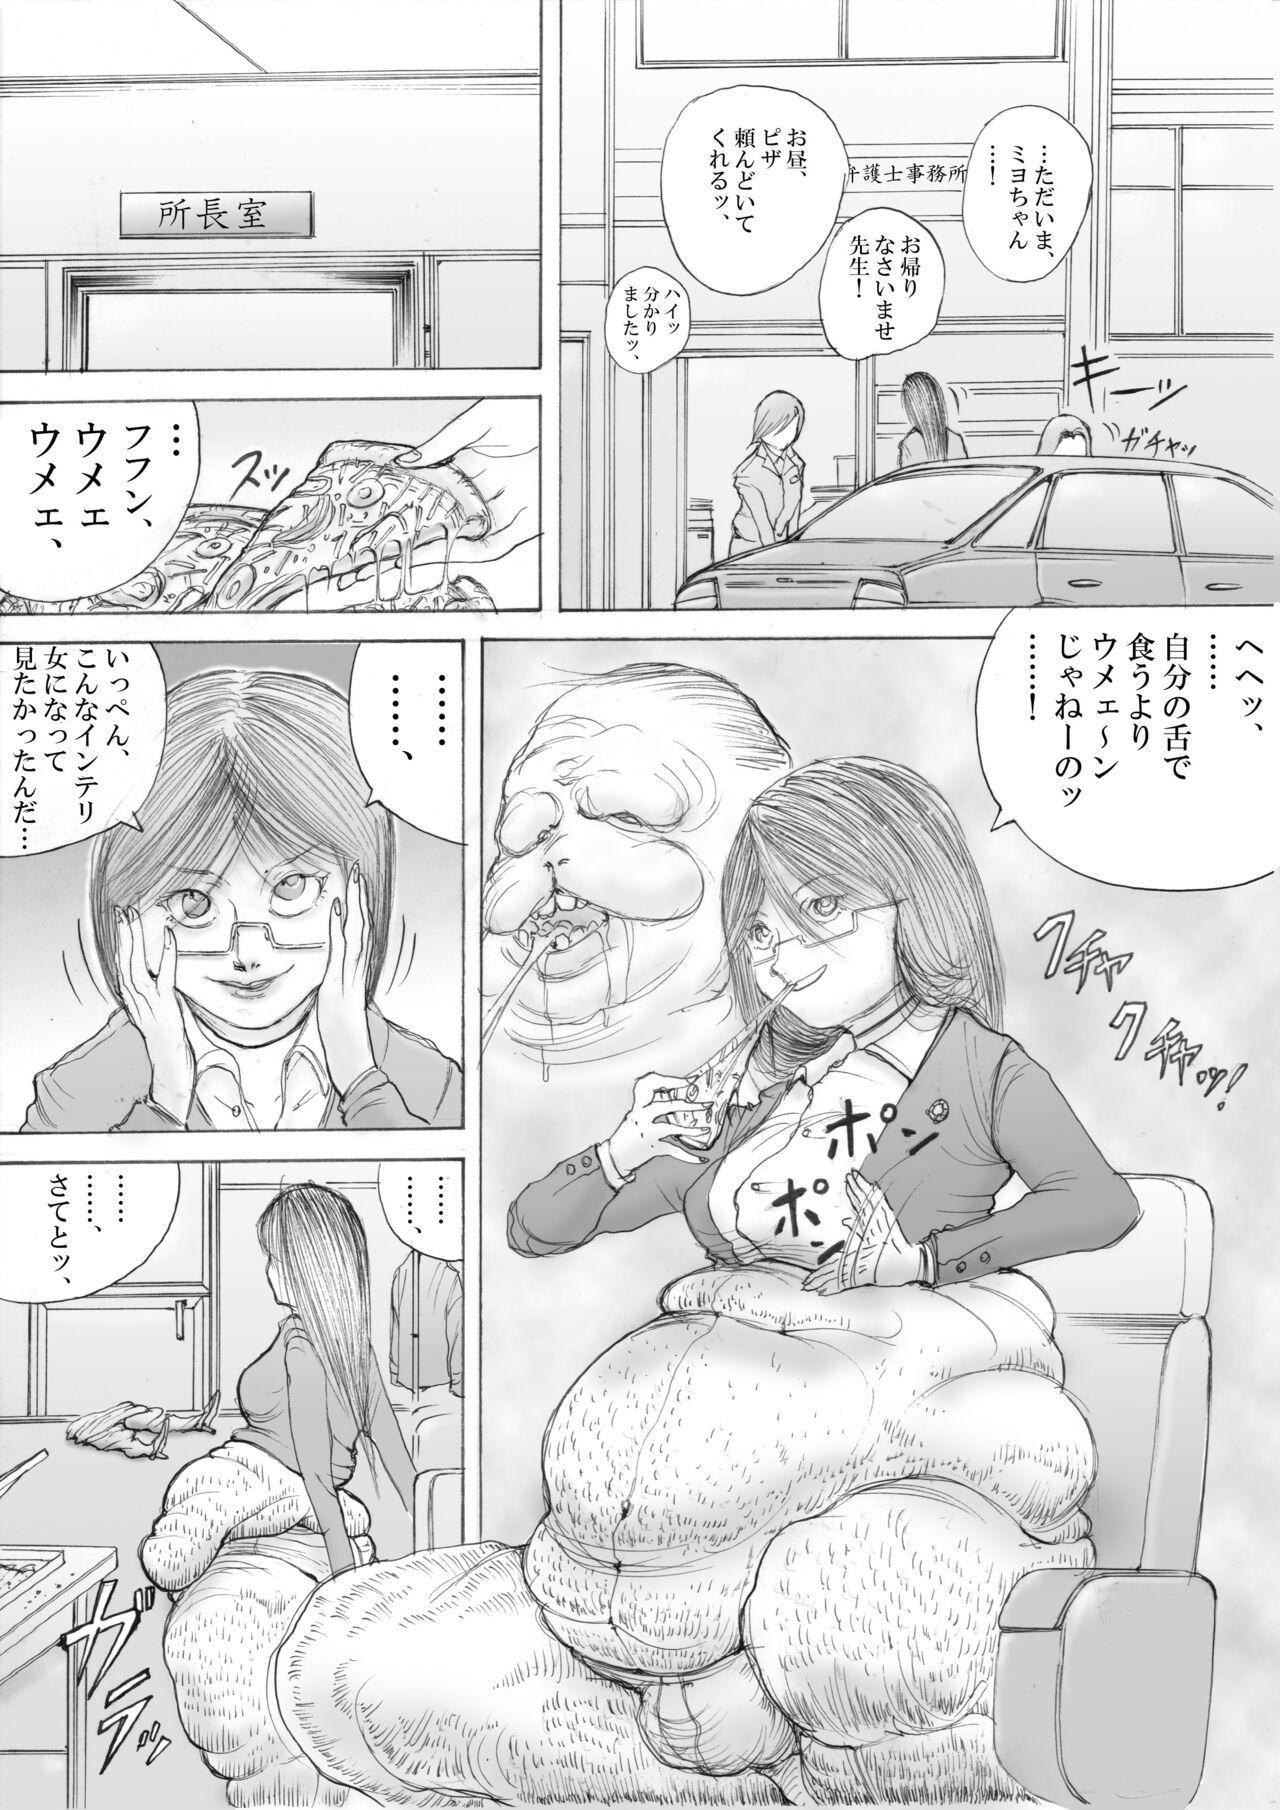 Spy Cam Horror Manga 7 Fucks - Page 9